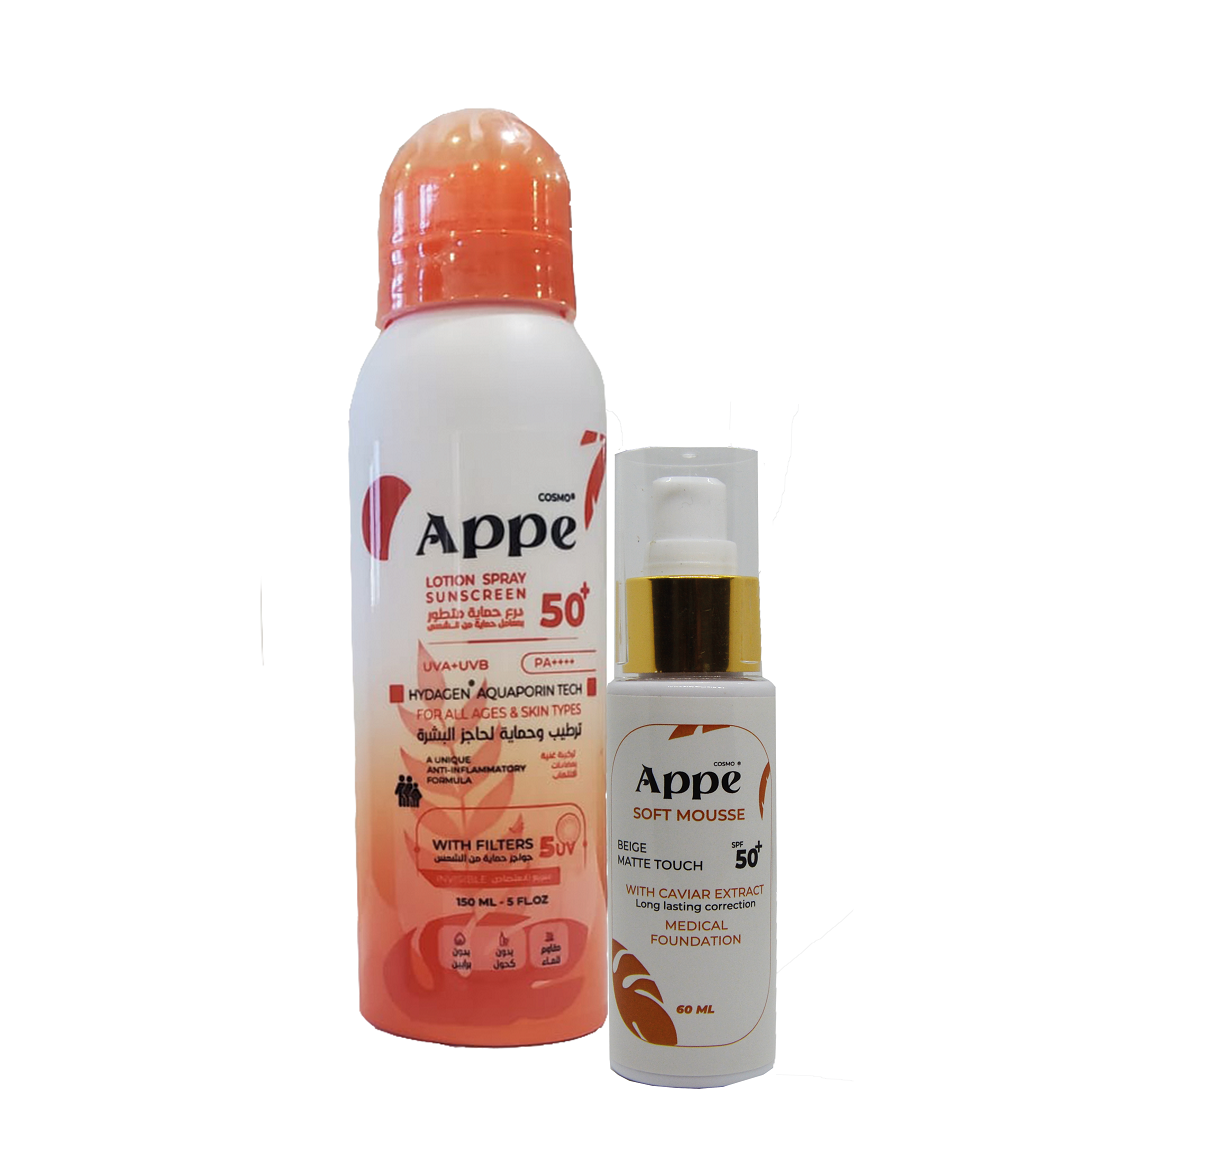 COSMO APPE Spray Lotion + Soft Mousse Sunscreen spf 50+ سبراي الحماية من الشمس وفاونديشن طبي